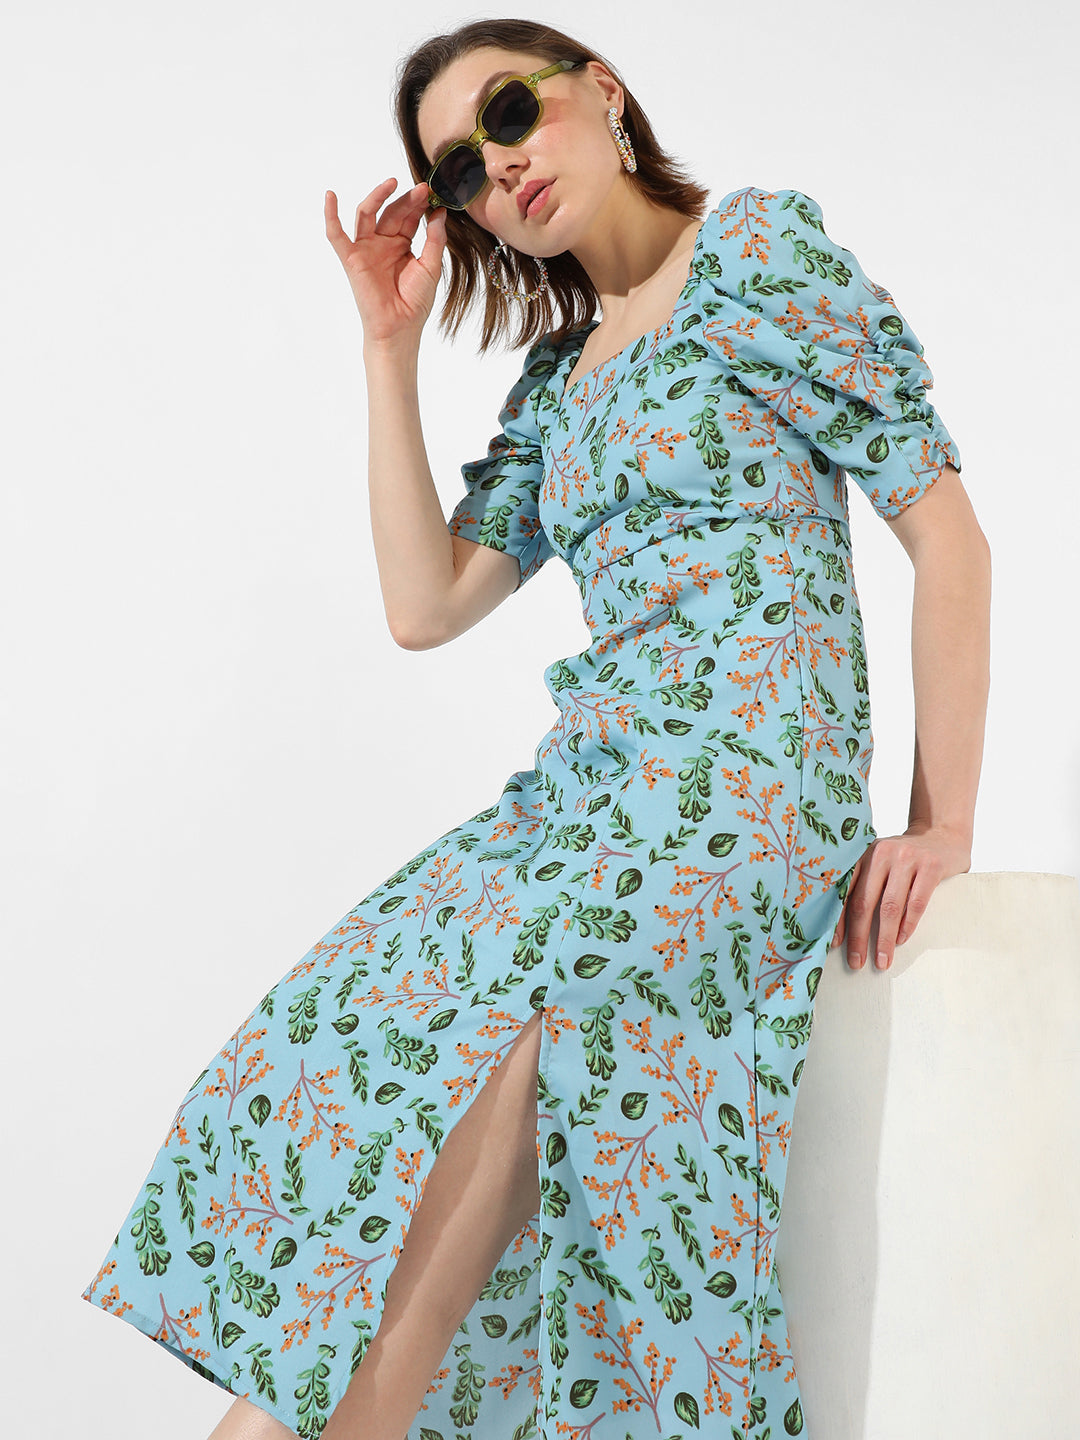 Botanical Print Dress With Slit